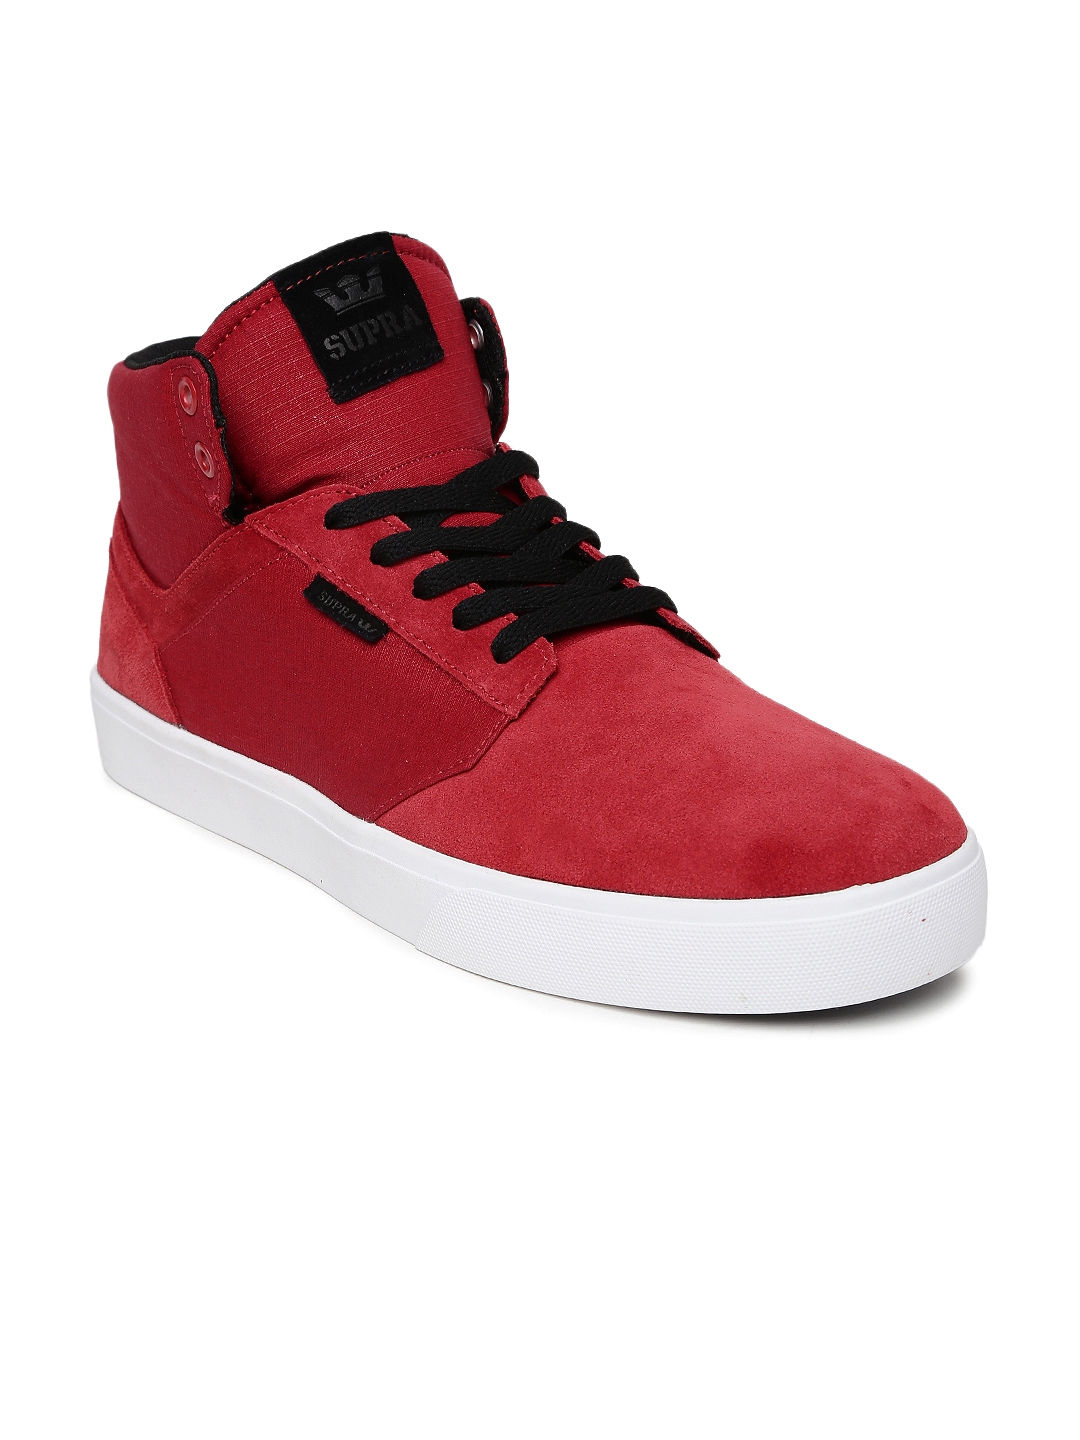 Buy Supra Men Red Sneakers - Casual Shoes for Men 1429071 | Myntra